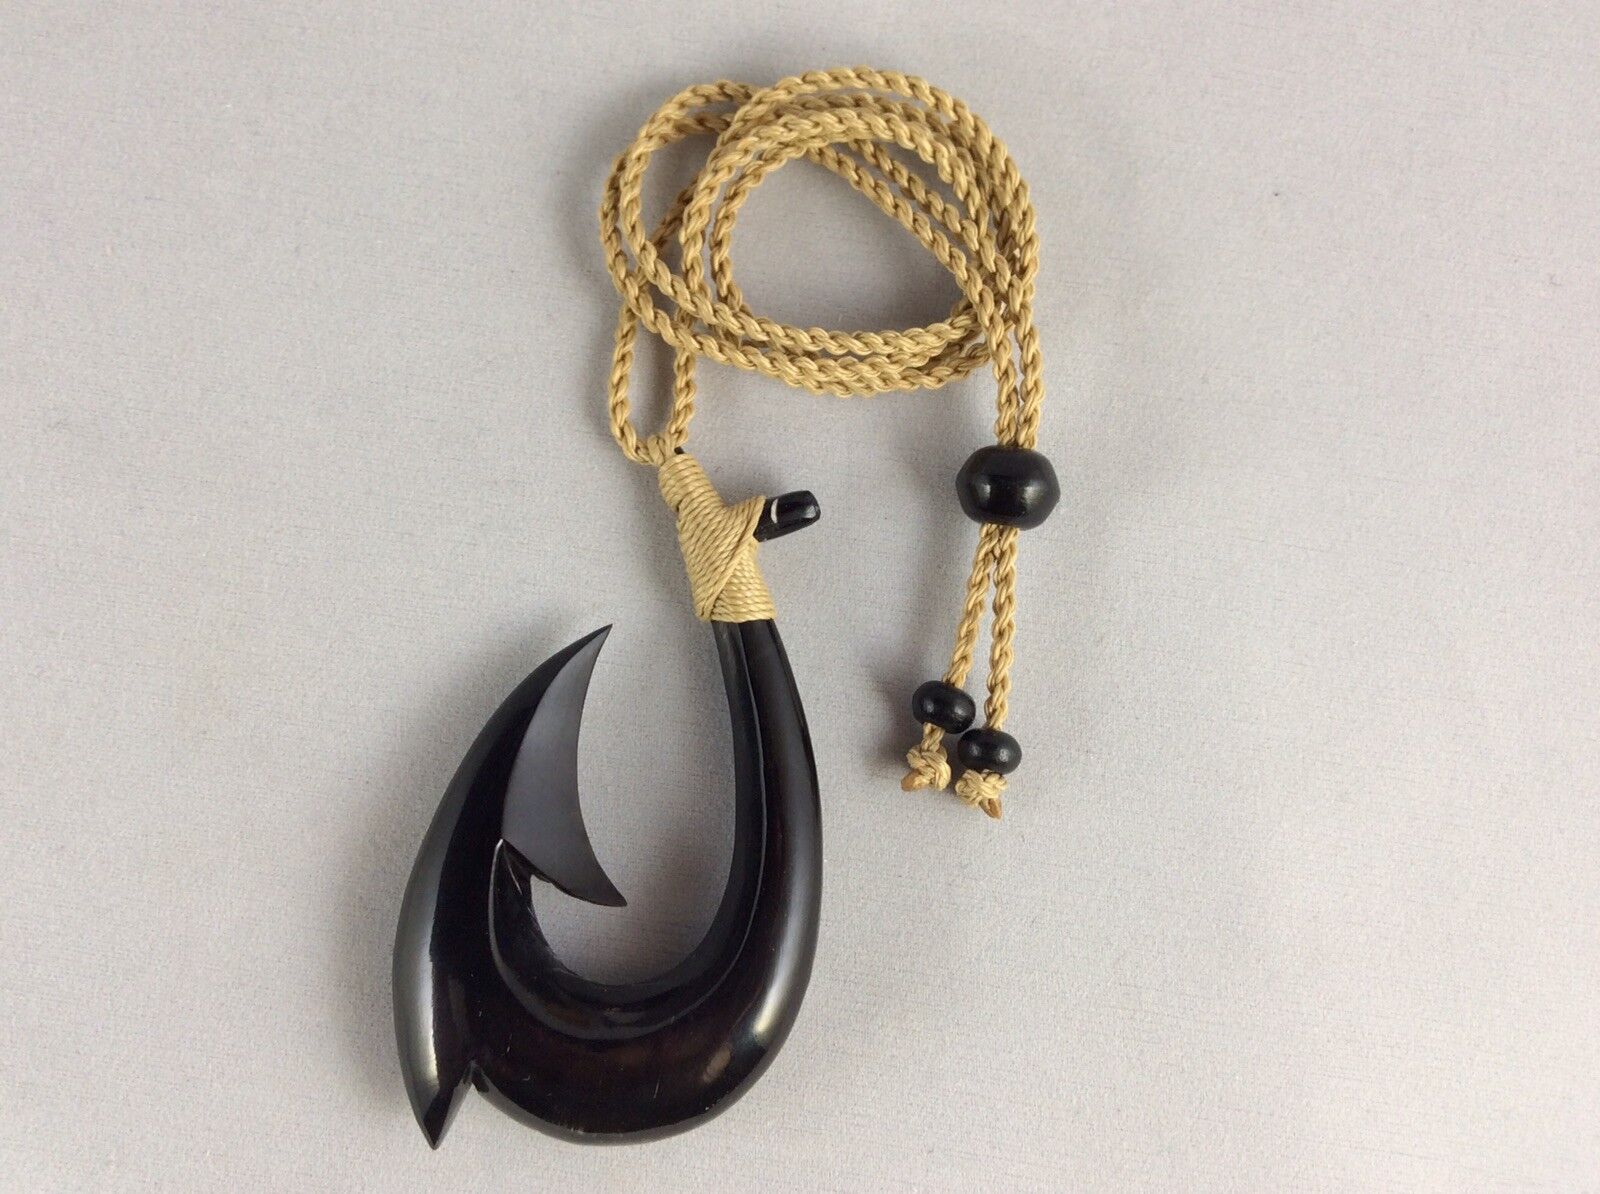 Hawaiian Fishhook Necklace Carved From Buffalo Horn XLarge 3”T.Adjustable Cord